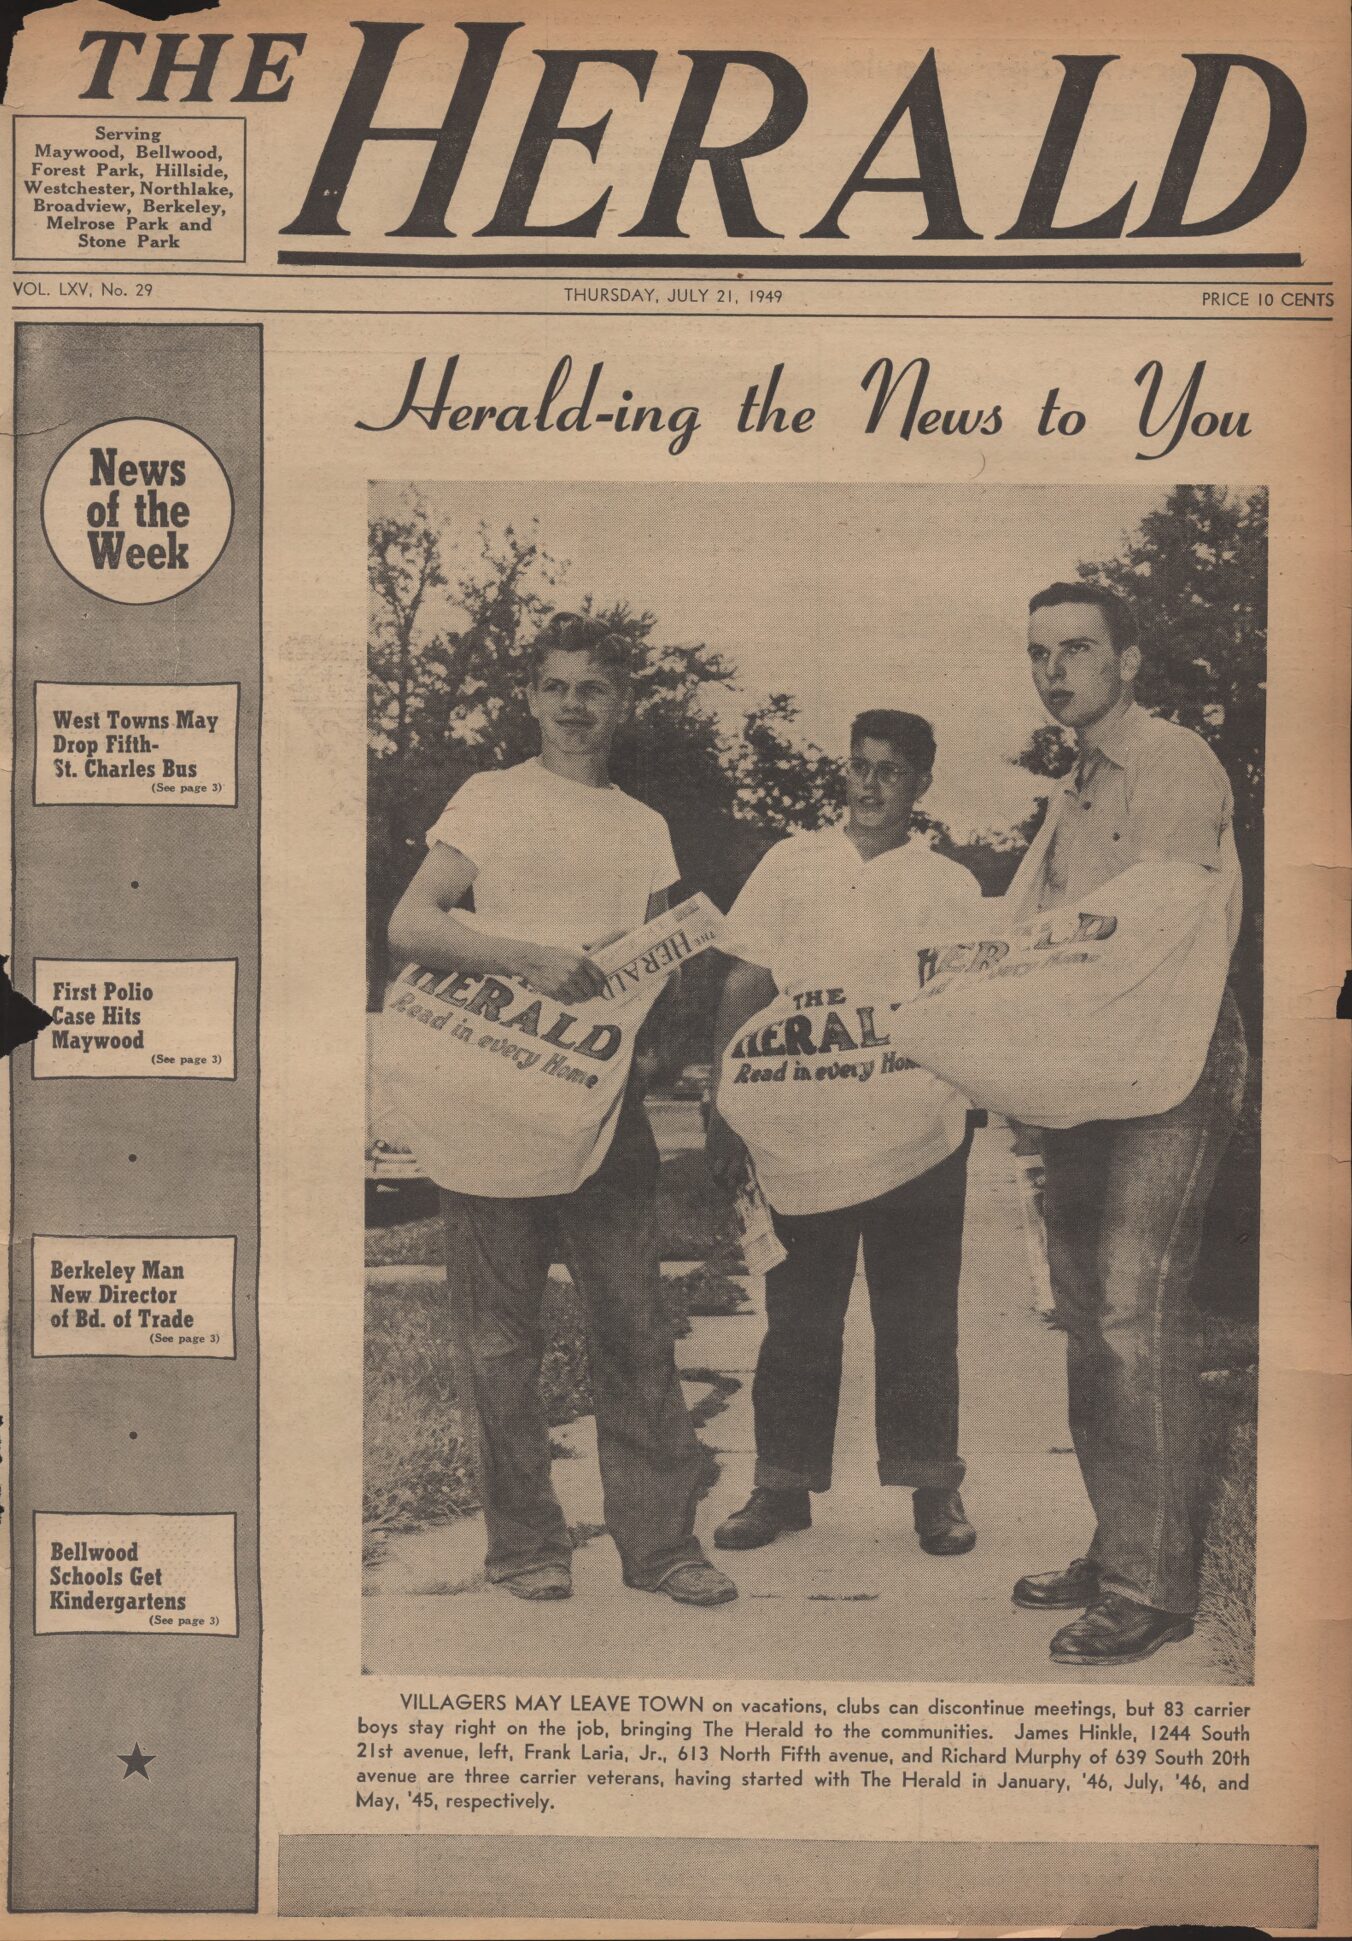 The Herald – 19490721